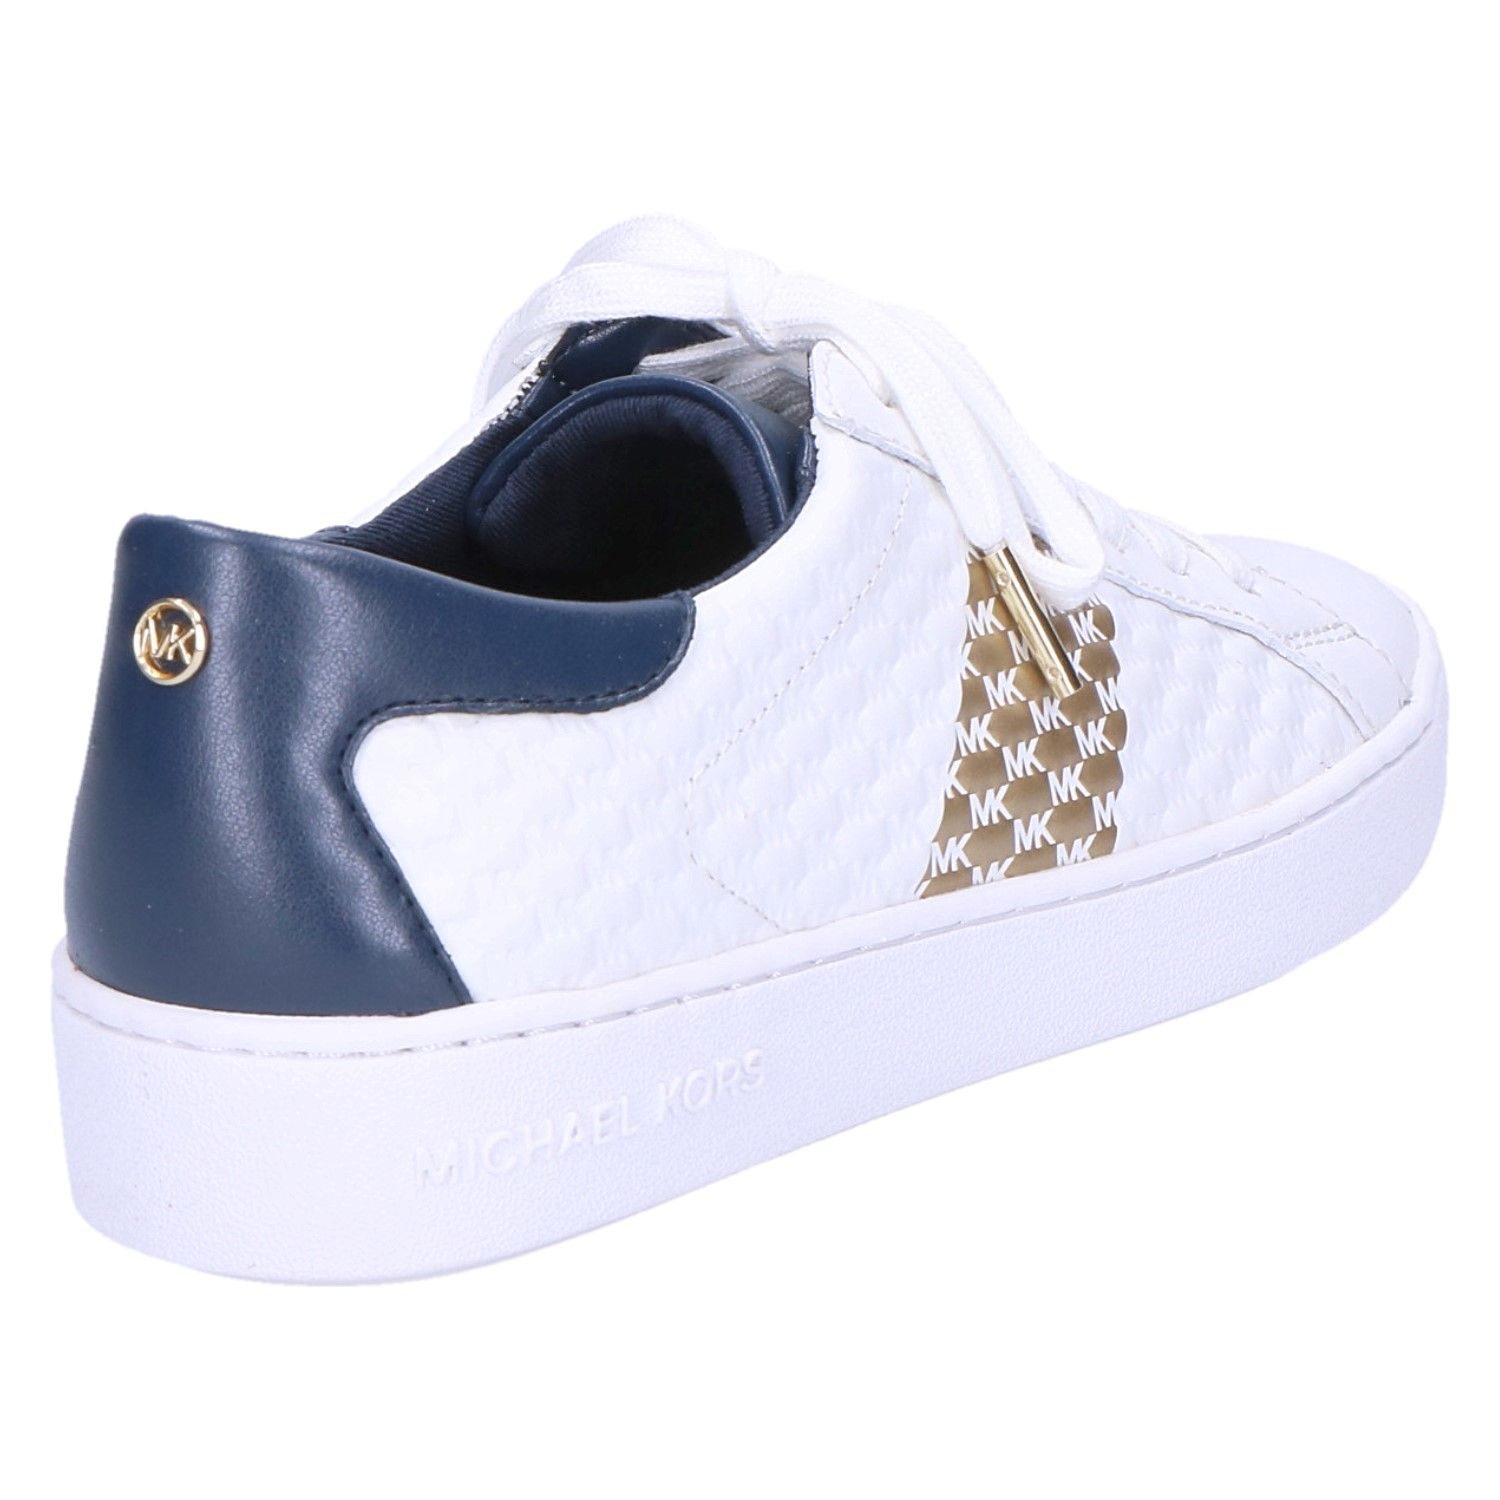 Michael Kors Colby Sneaker white/navy/gold artikelnummer Colby navy/white verkrijgbaar bij Beurskens schoenmode.